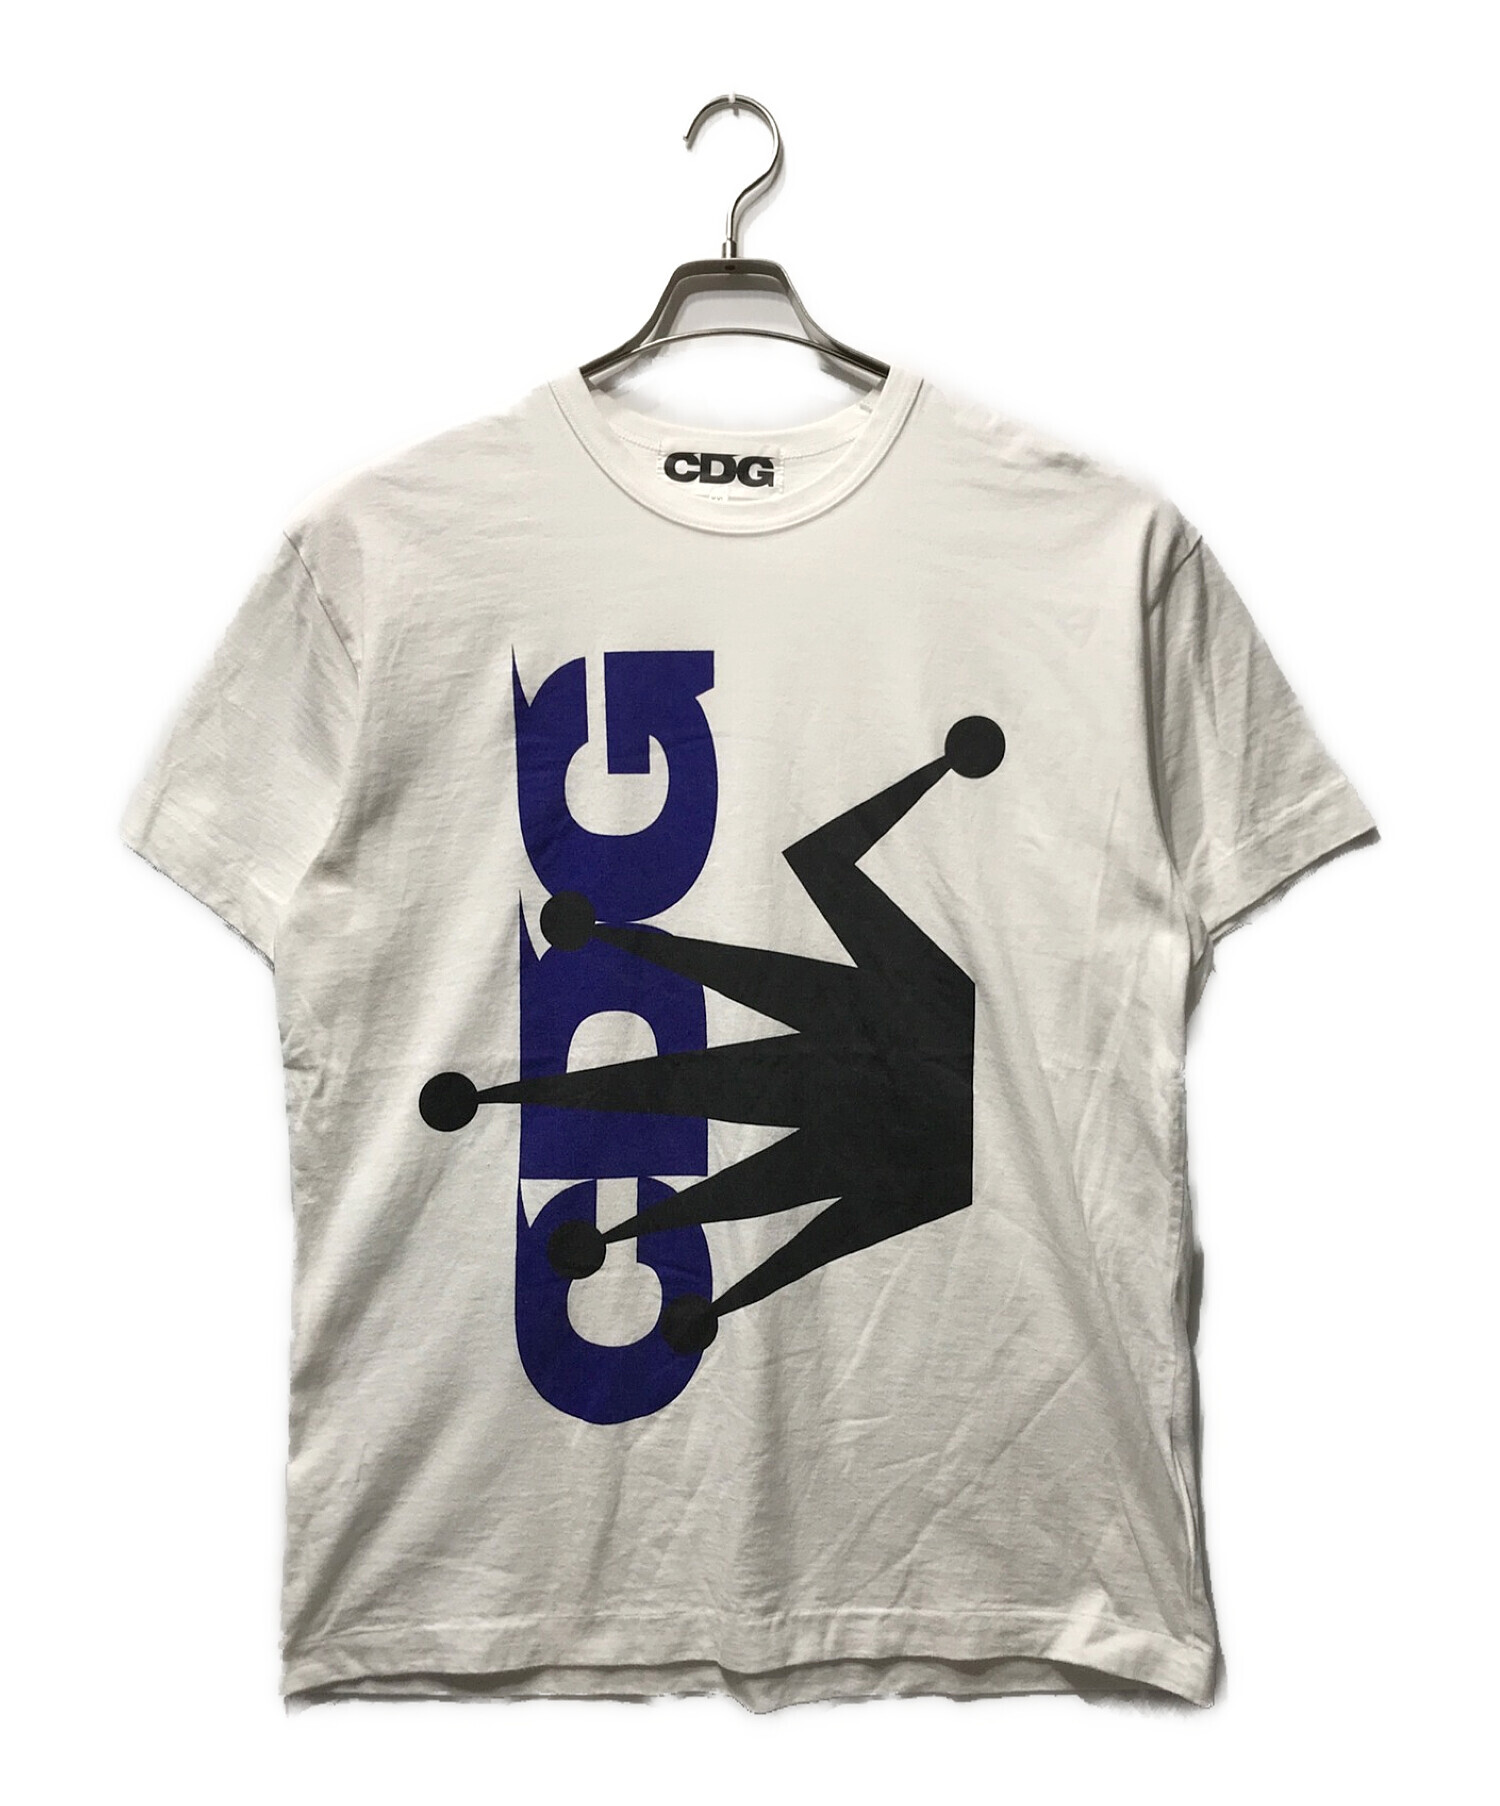 CDG (コムデギャルソン) stussy (ステューシー) プリントTシャツ ホワイト×ブルー サイズ:XXL